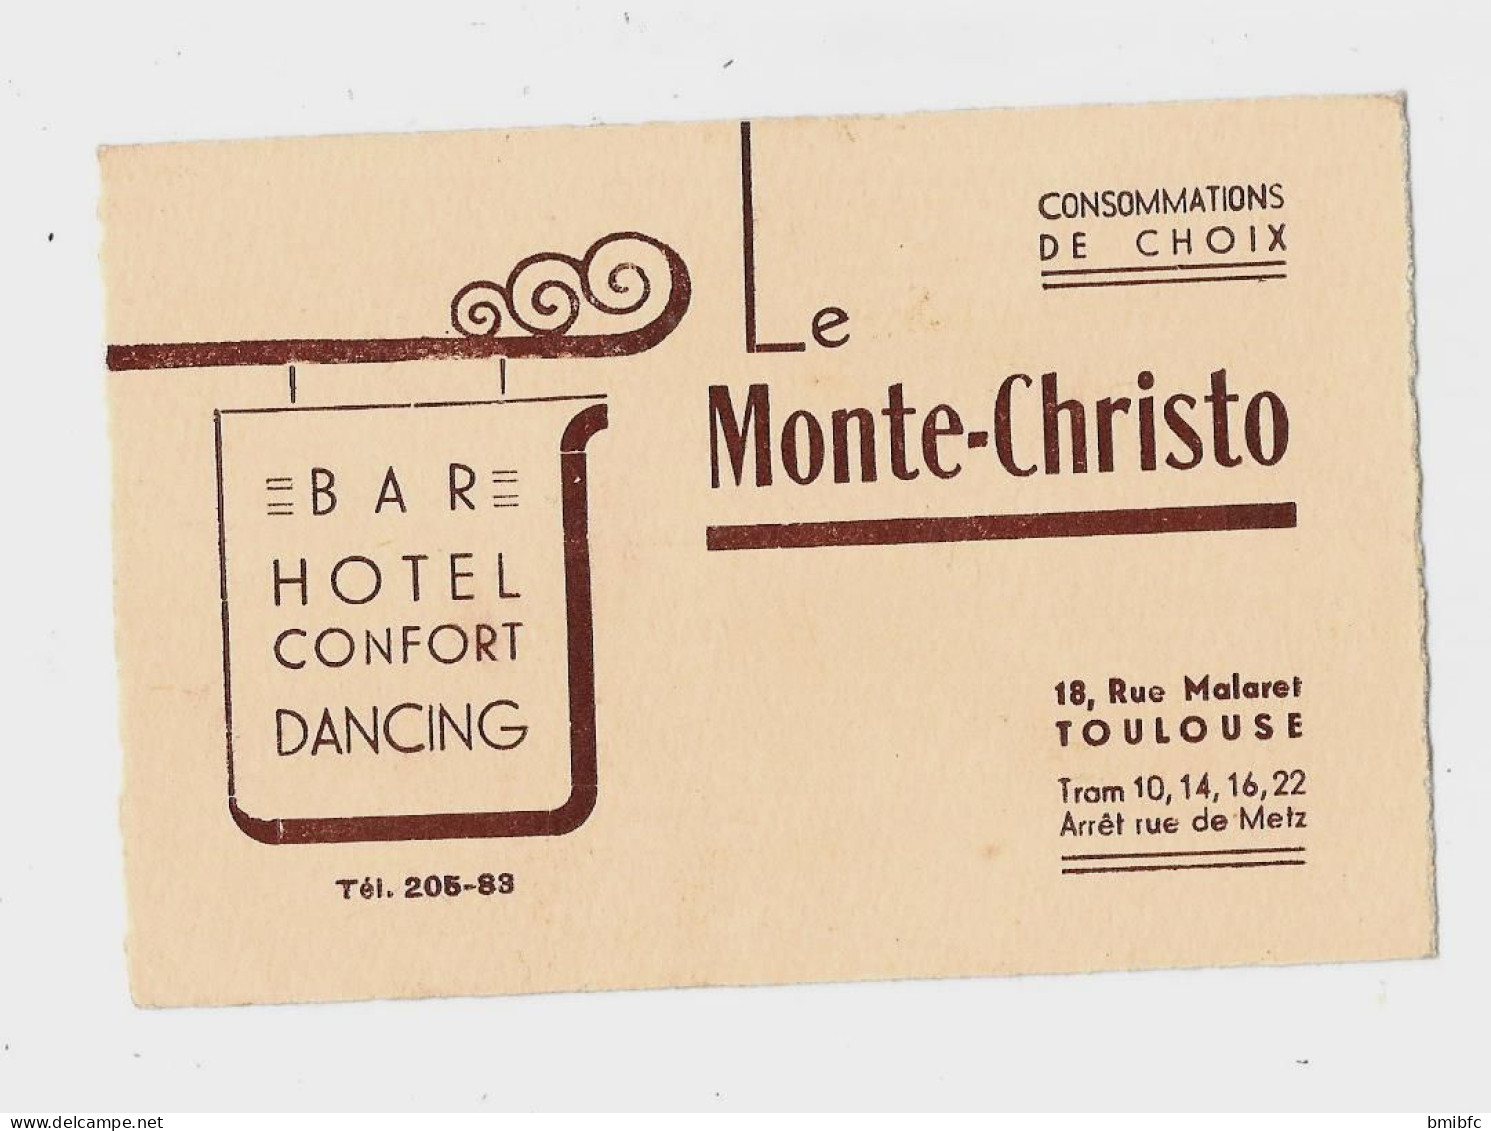 BAR HOTEL CONFORT DANCING Tél  205-83 Le Monte-Christo 18, Rue Malaret TOULOUSE Tram 10,14,16,22 - Tarjetas De Visita